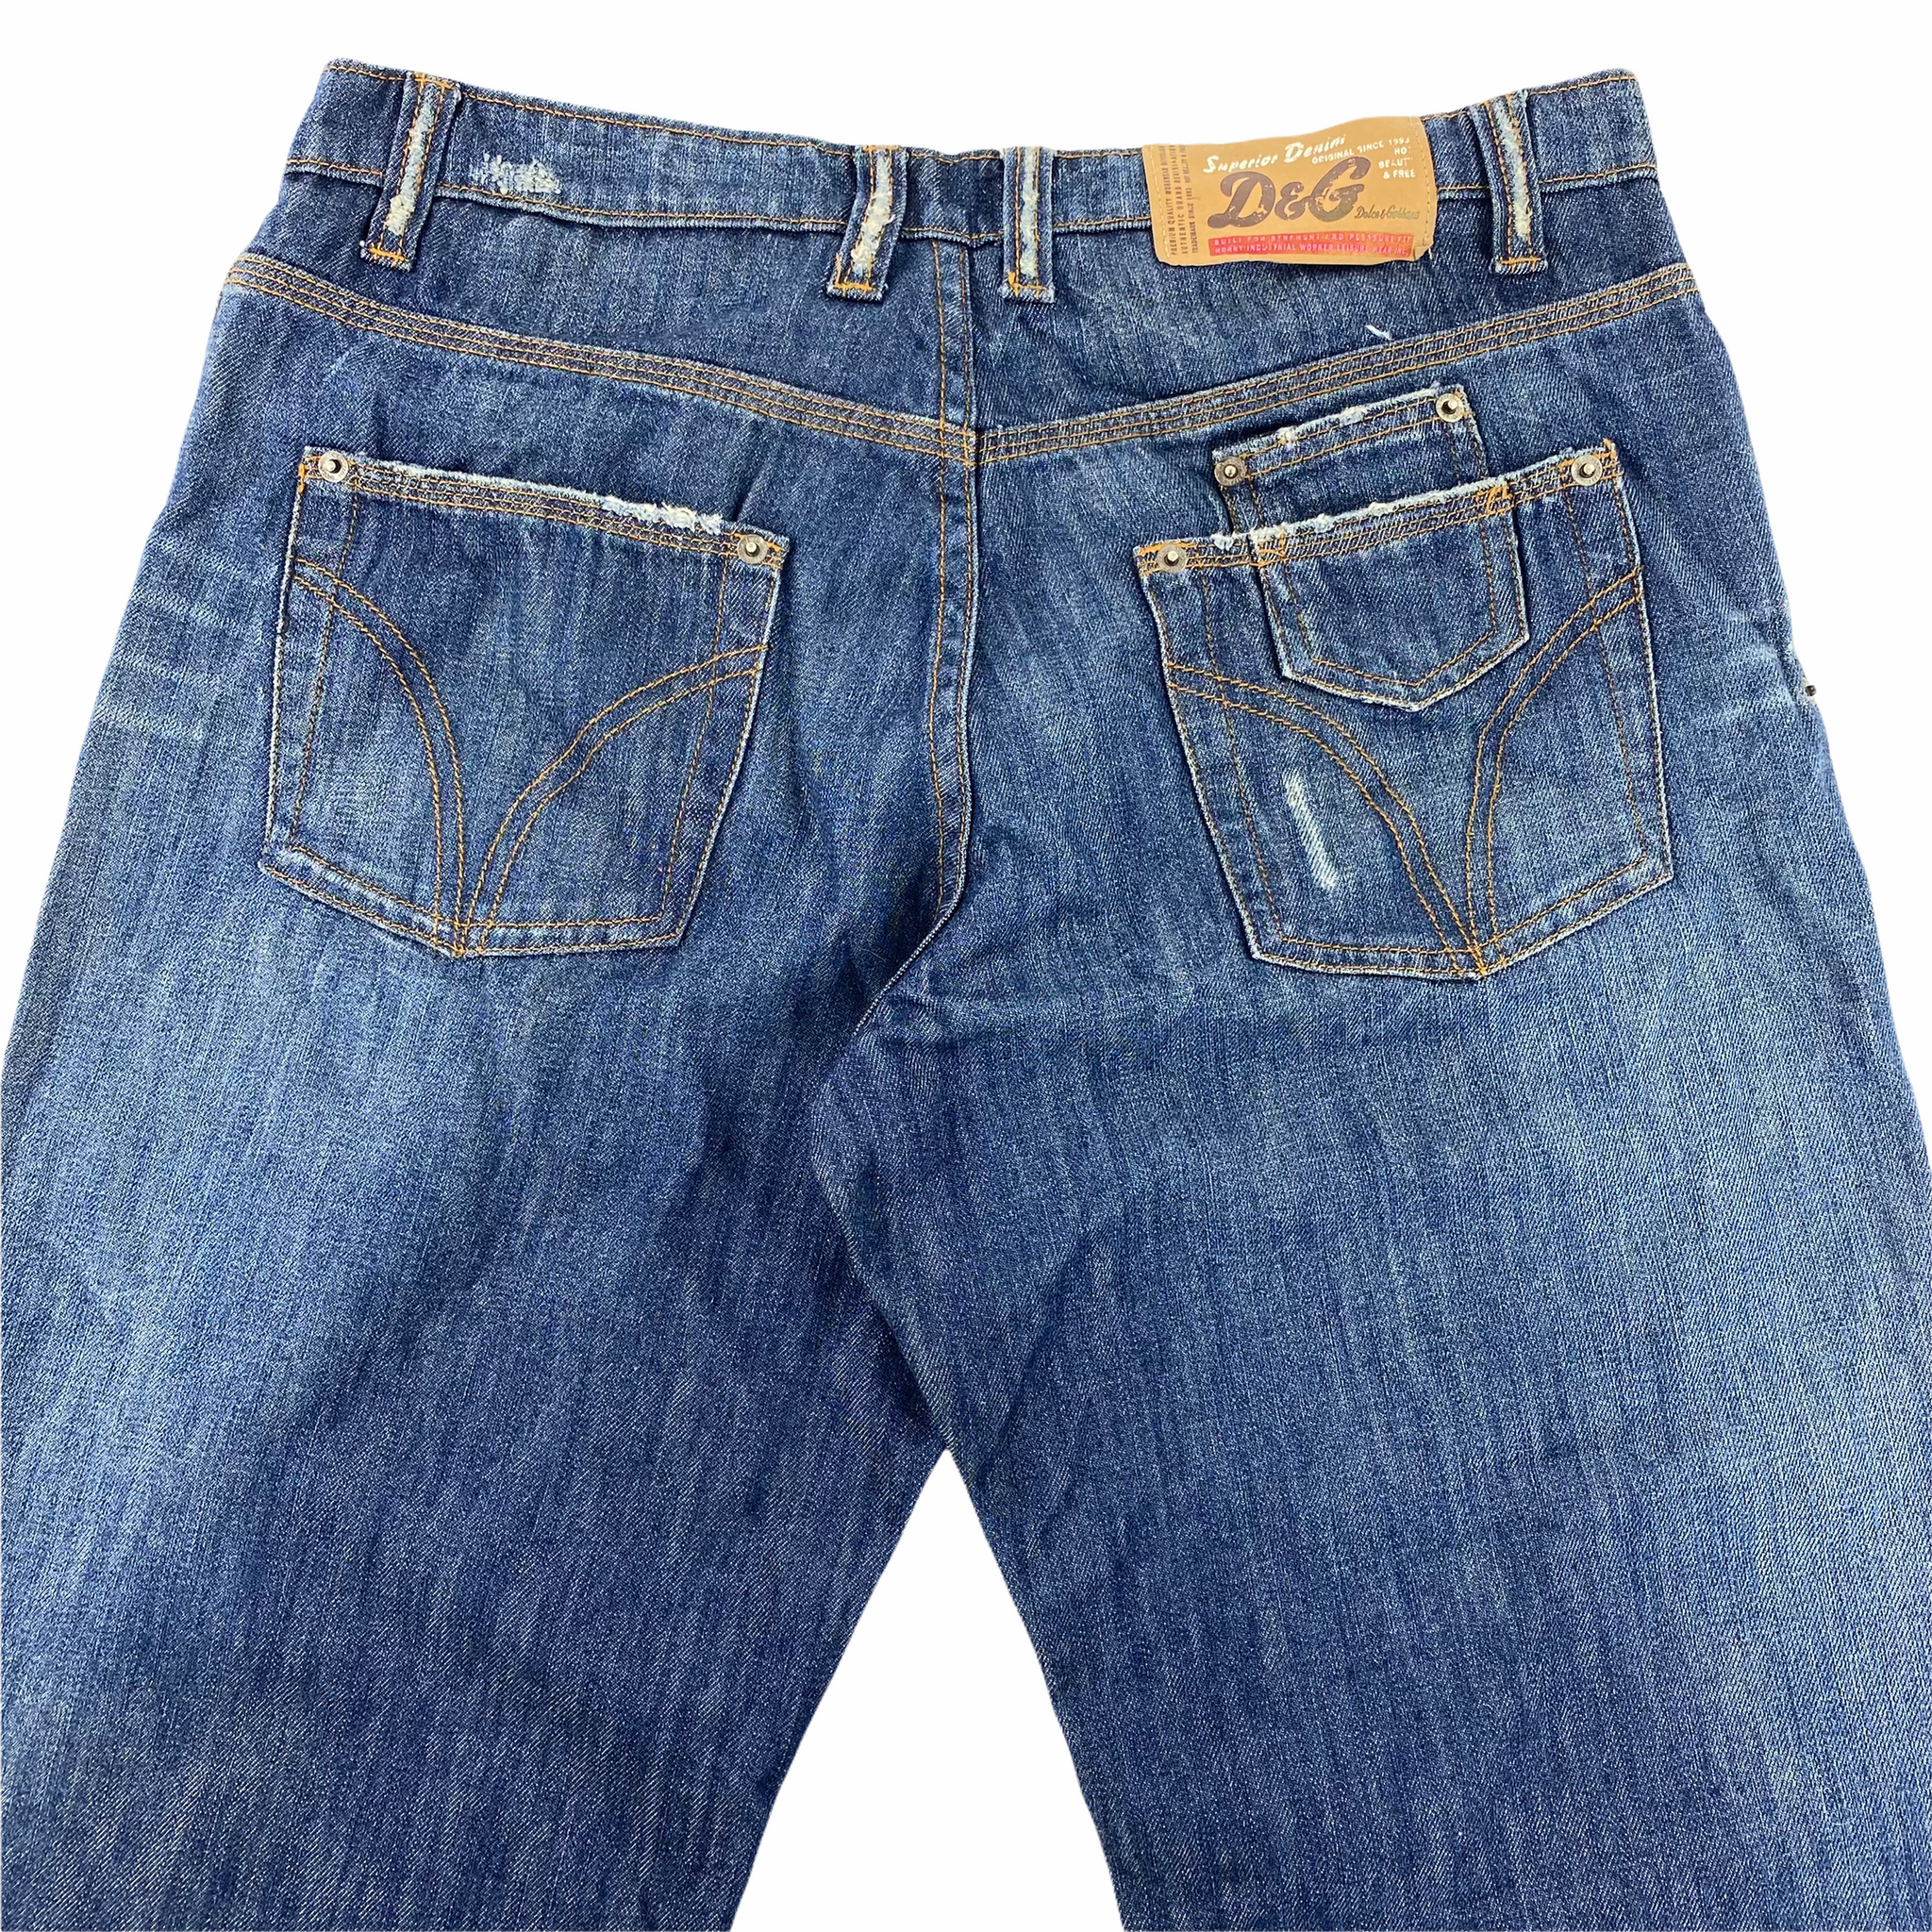 y2k D&G jeans. 36/33